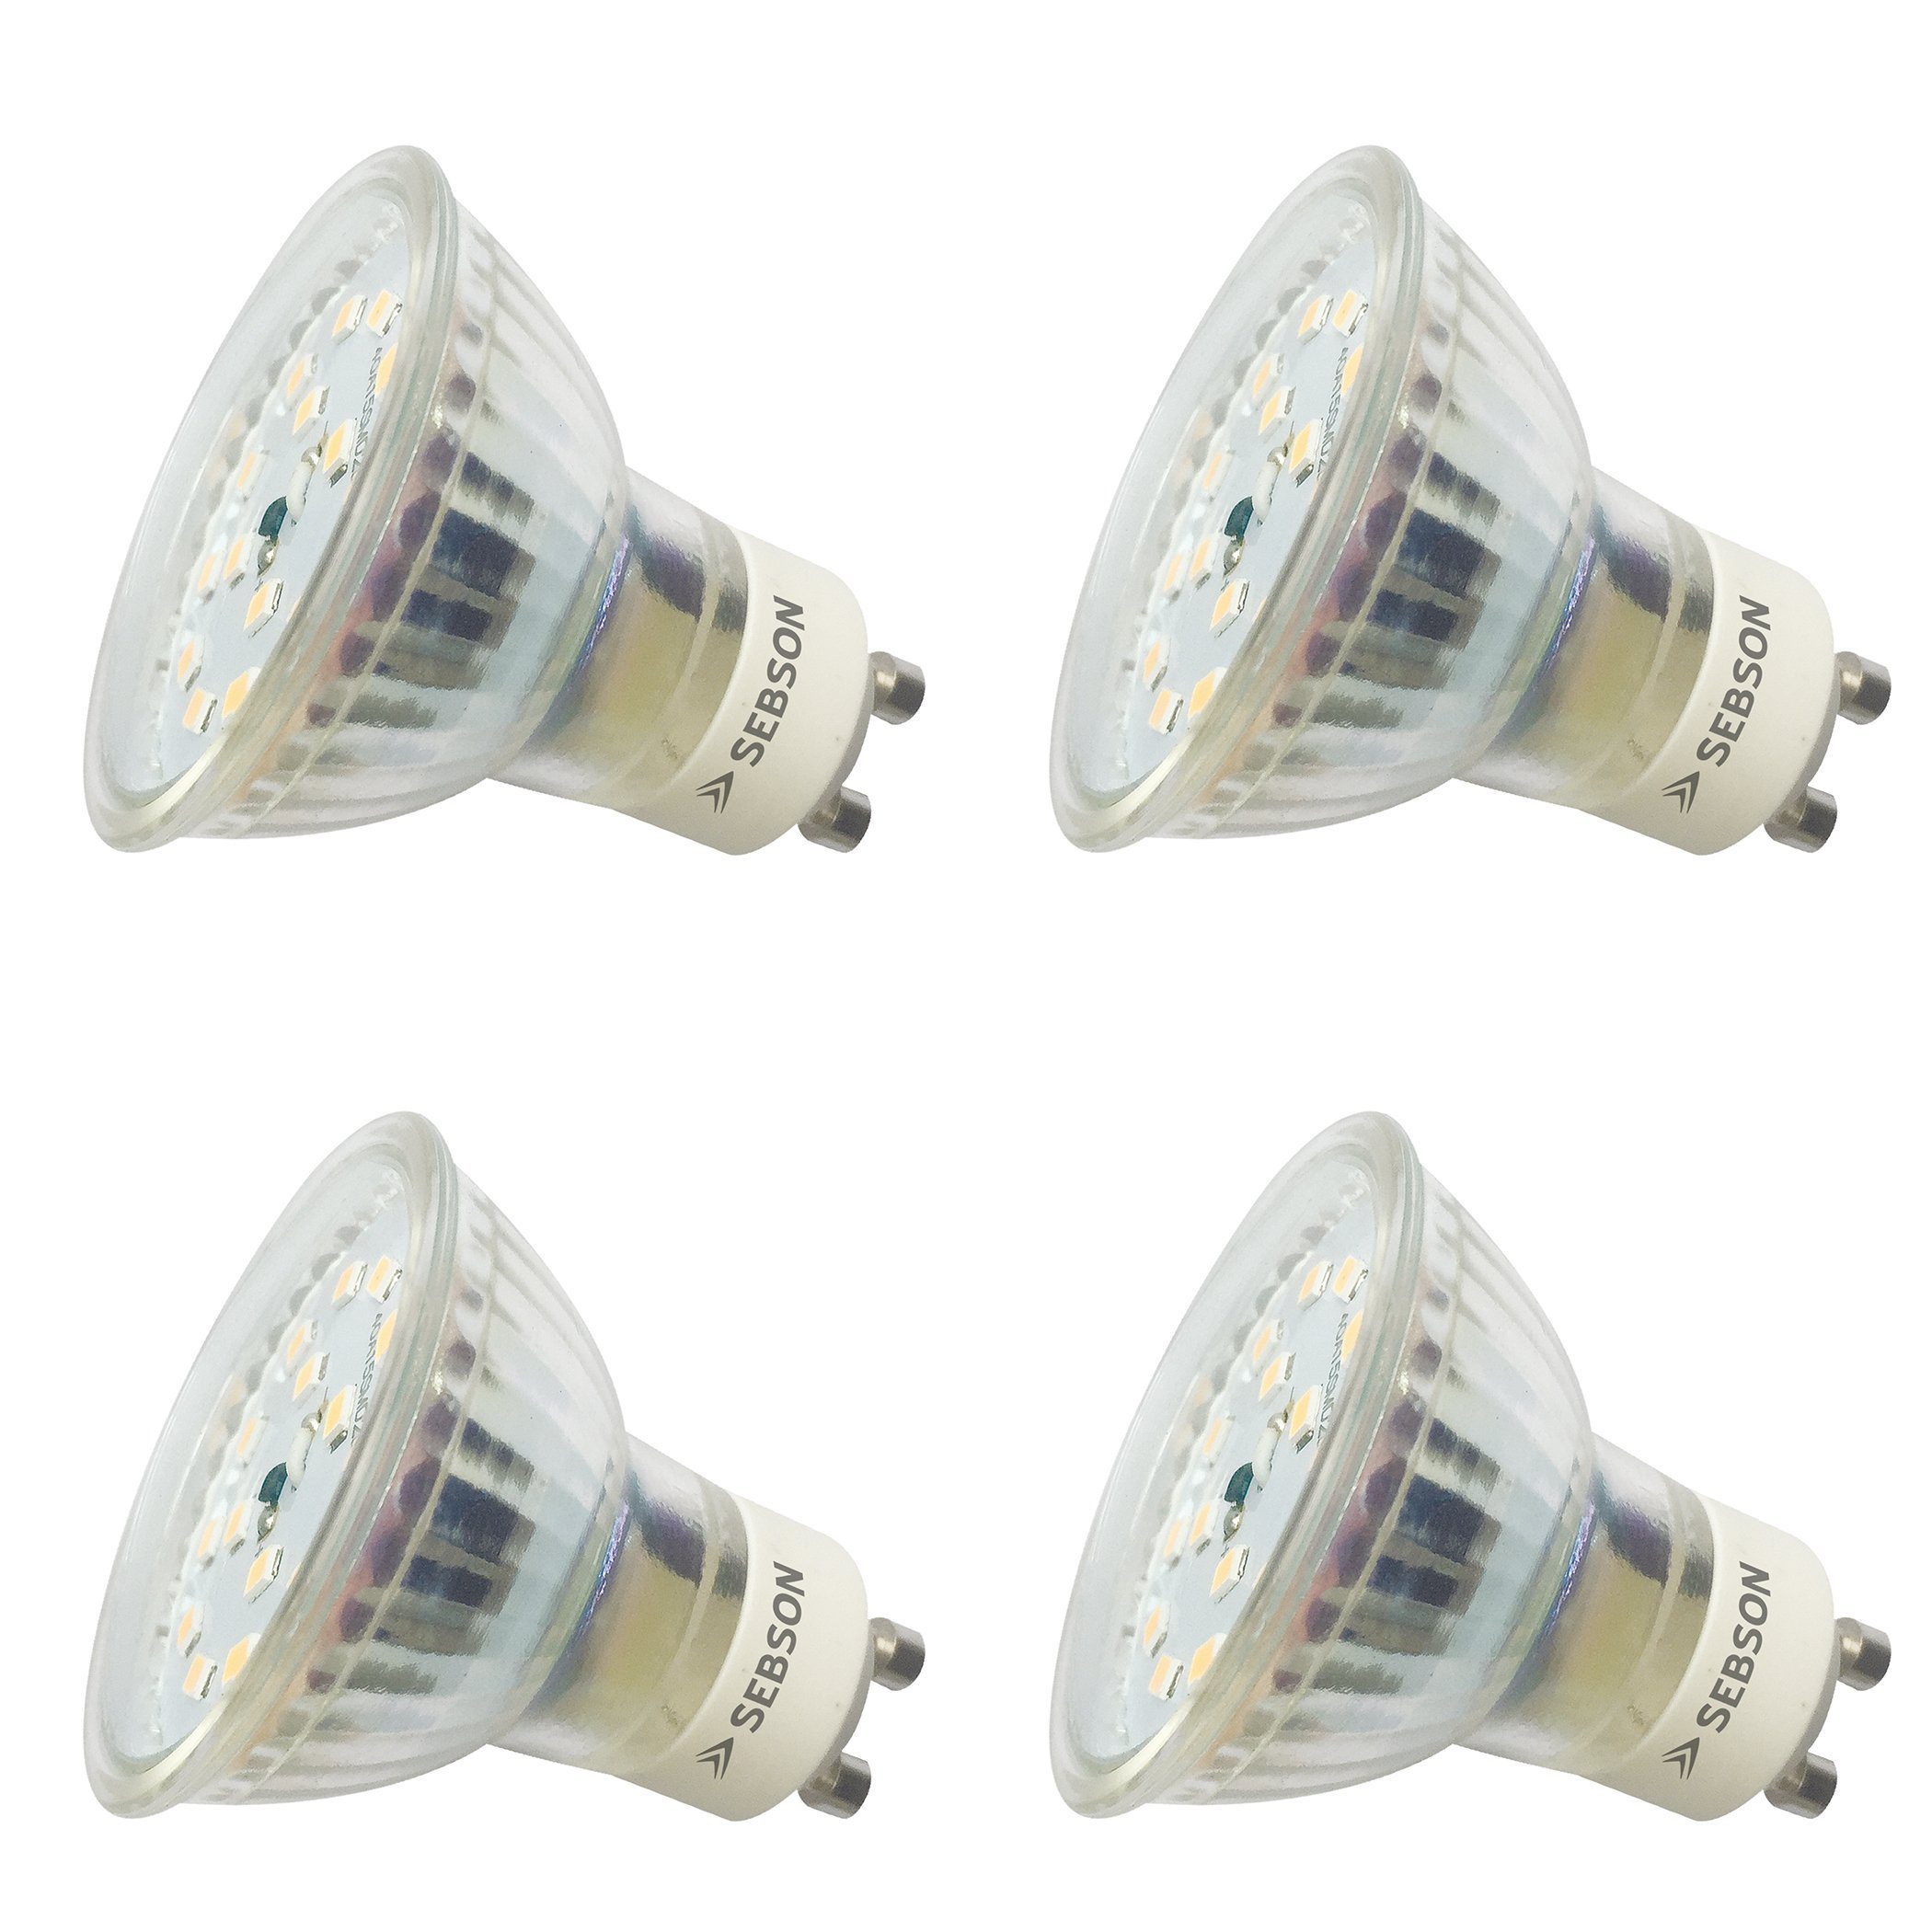 SEBSON Ra 95 Serie + flimmerfrei, GU10 LED Lampe 5W dimmbar warmweiß 350lm,  3000K, 230V LED Leuchtmittel, 4er Pack LED-Leuchtmittel